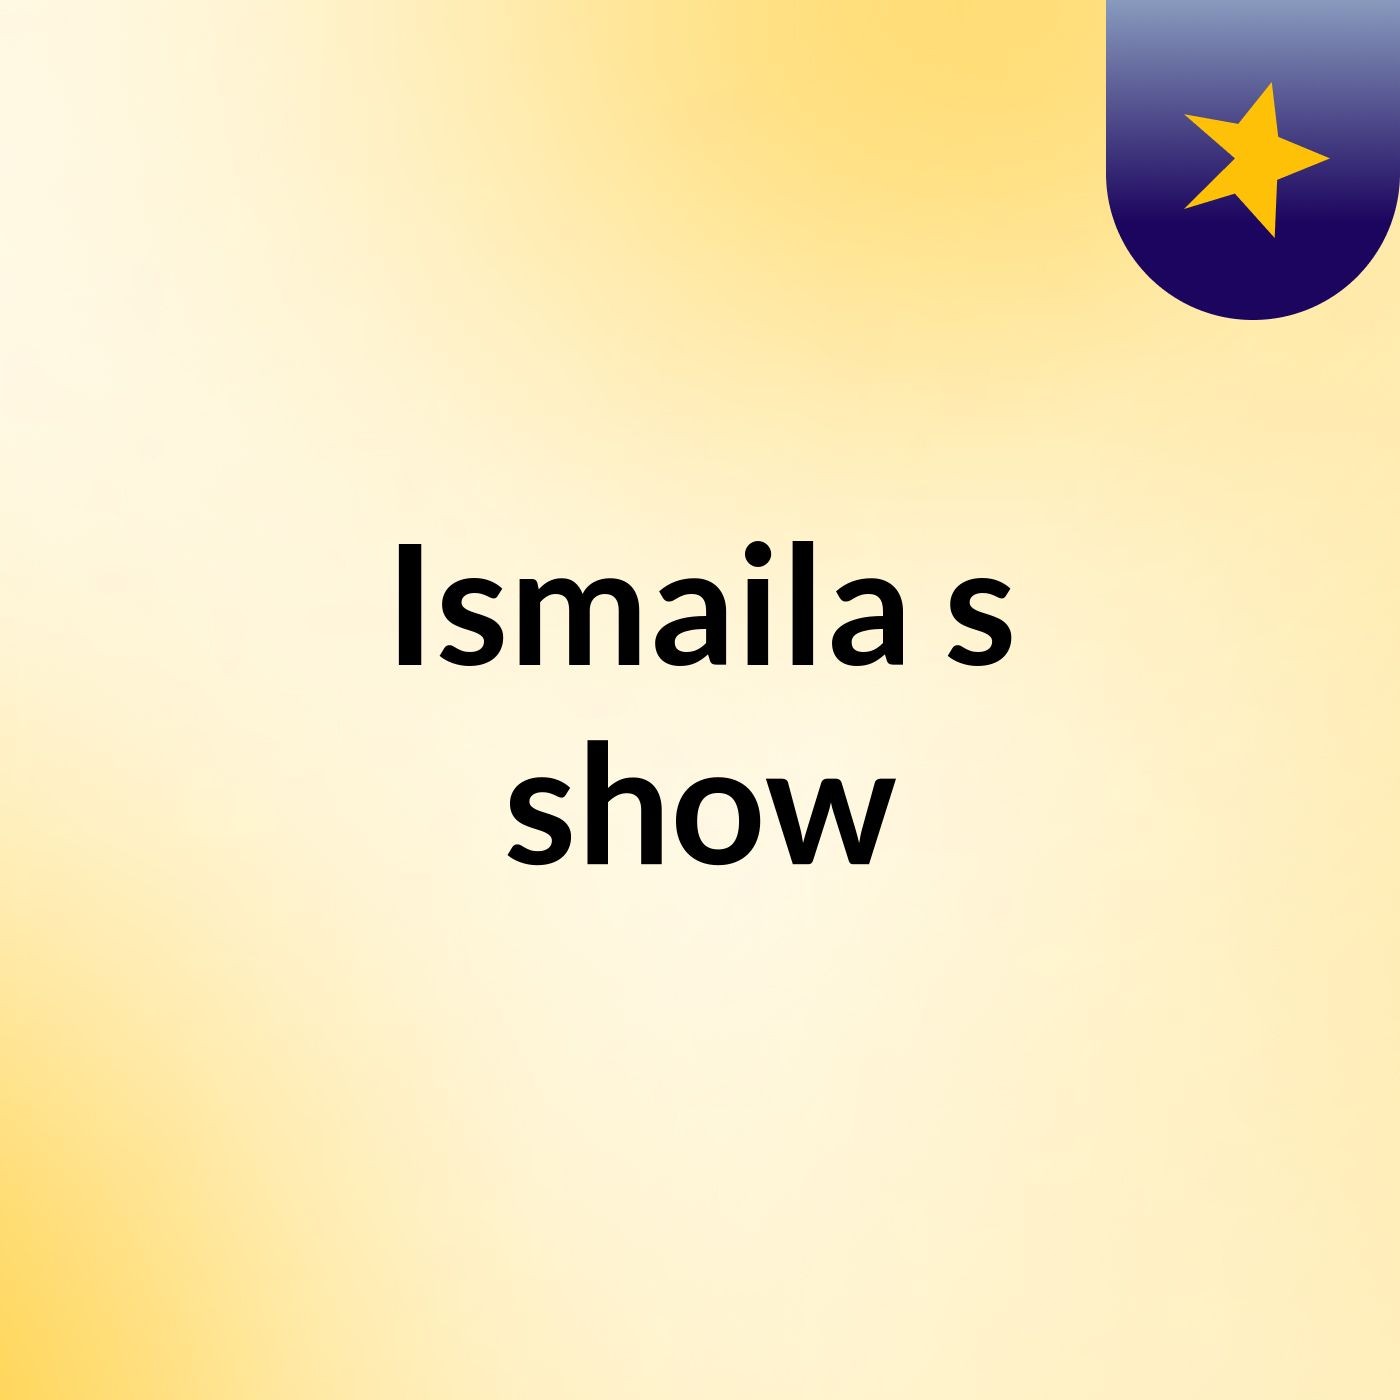 Ismaila's show